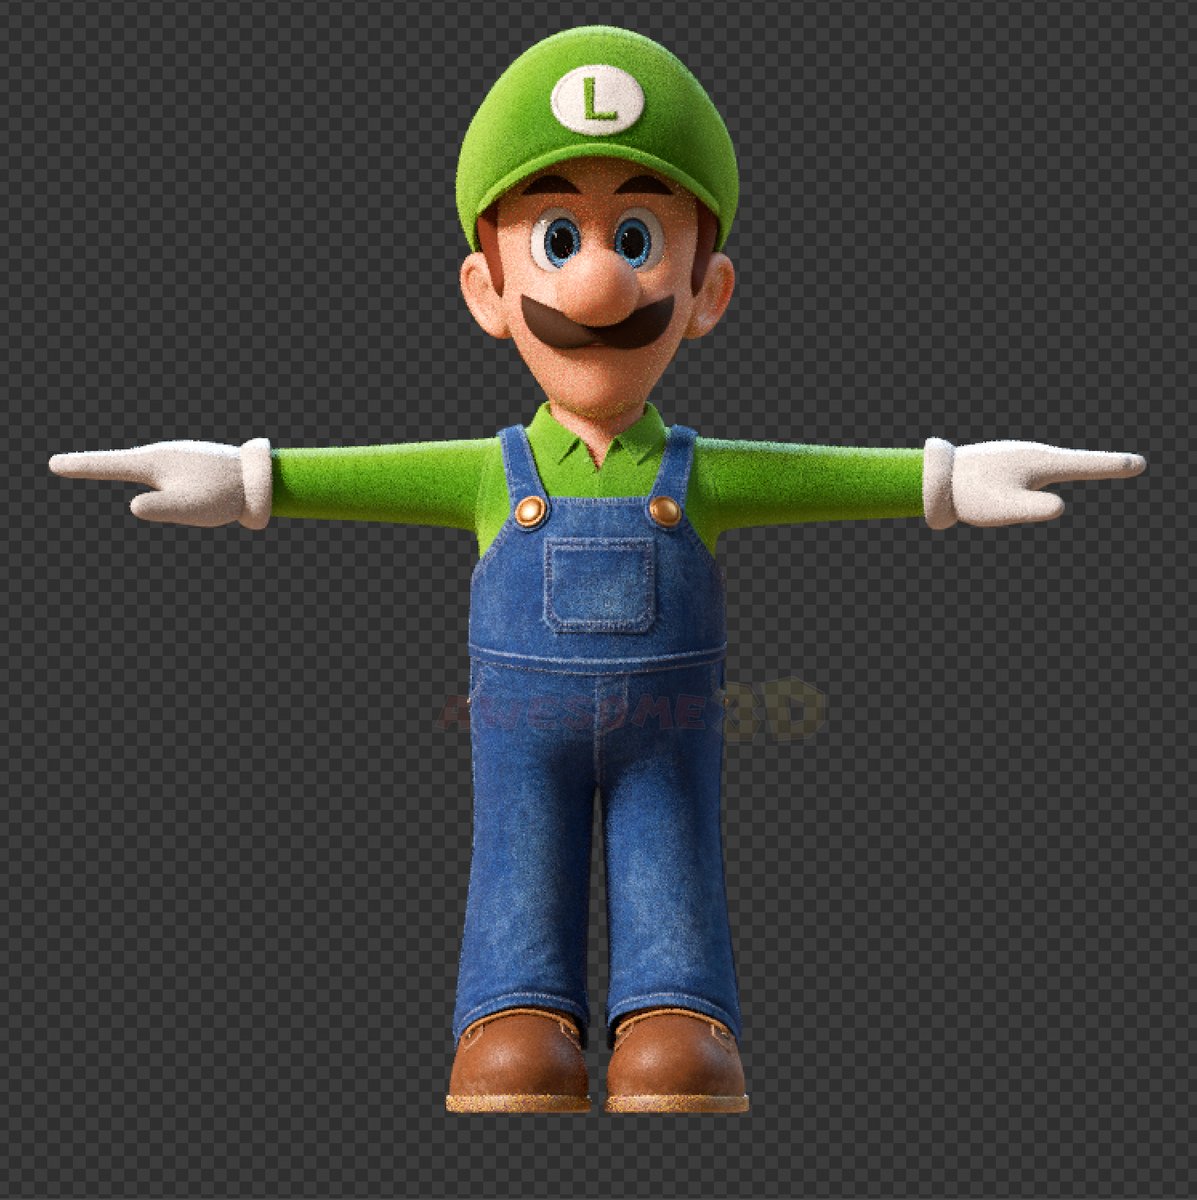 New Luigi model in progress! 👀
#supermariobrosmovie #luigi #Mario